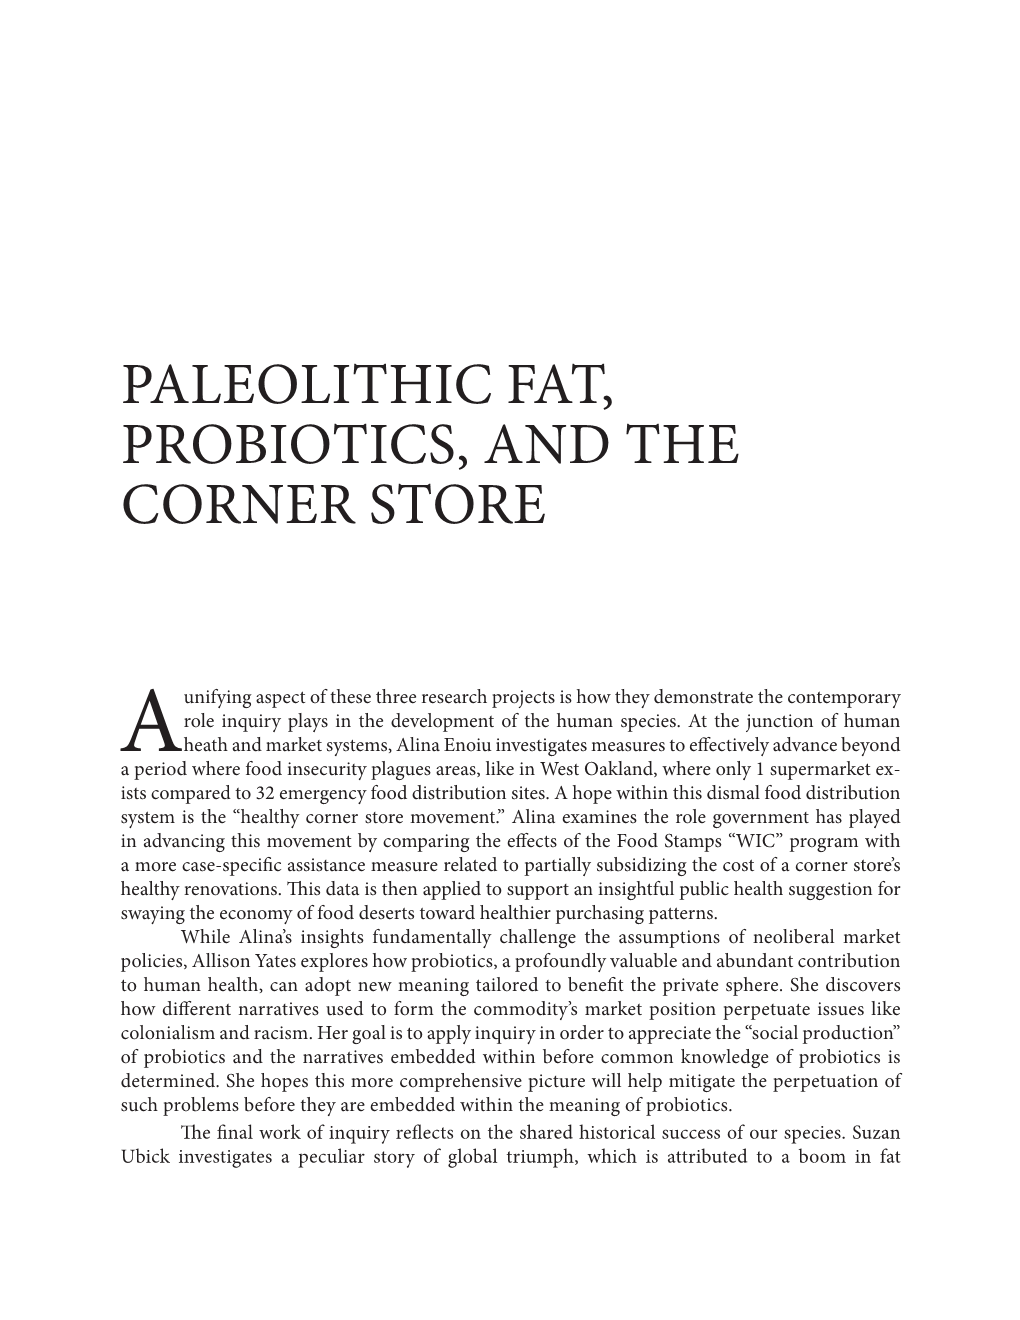 Paleolithic Fat, Probiotics, and the Corner Store